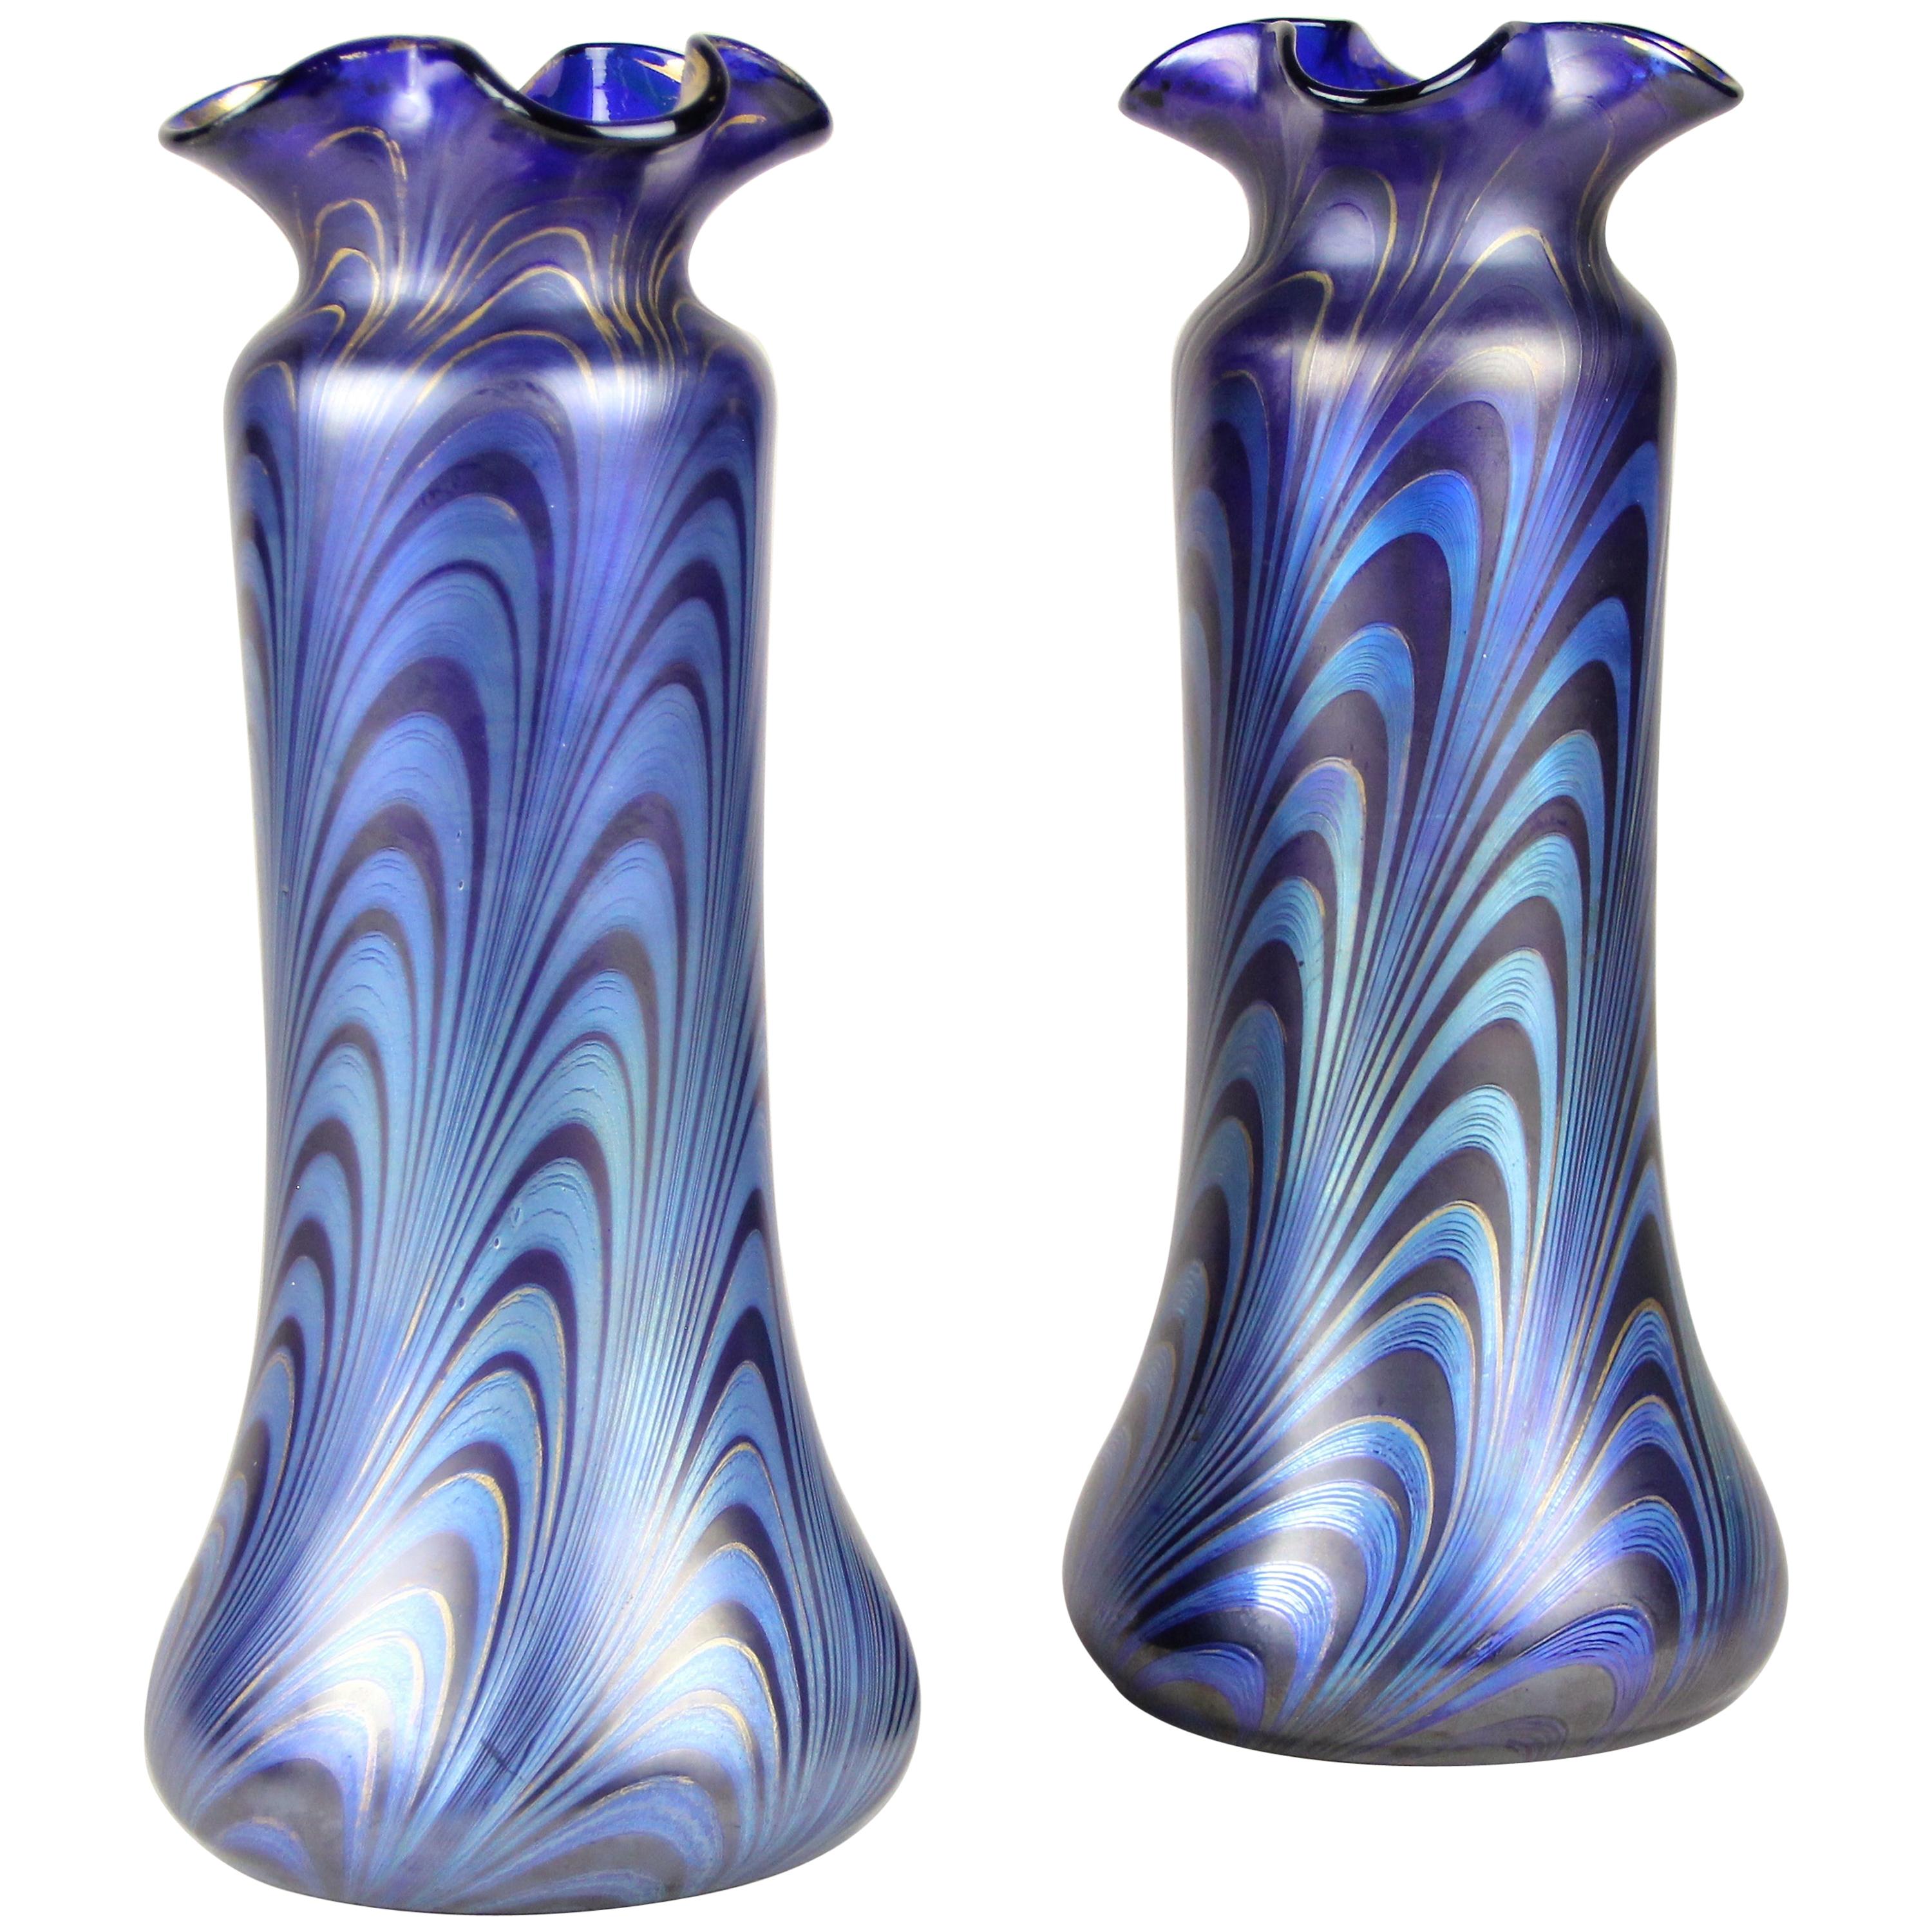 Pair of Loetz Witwe Glass Vases Phaenomen Genre 7624, Bohemia, circa 1898